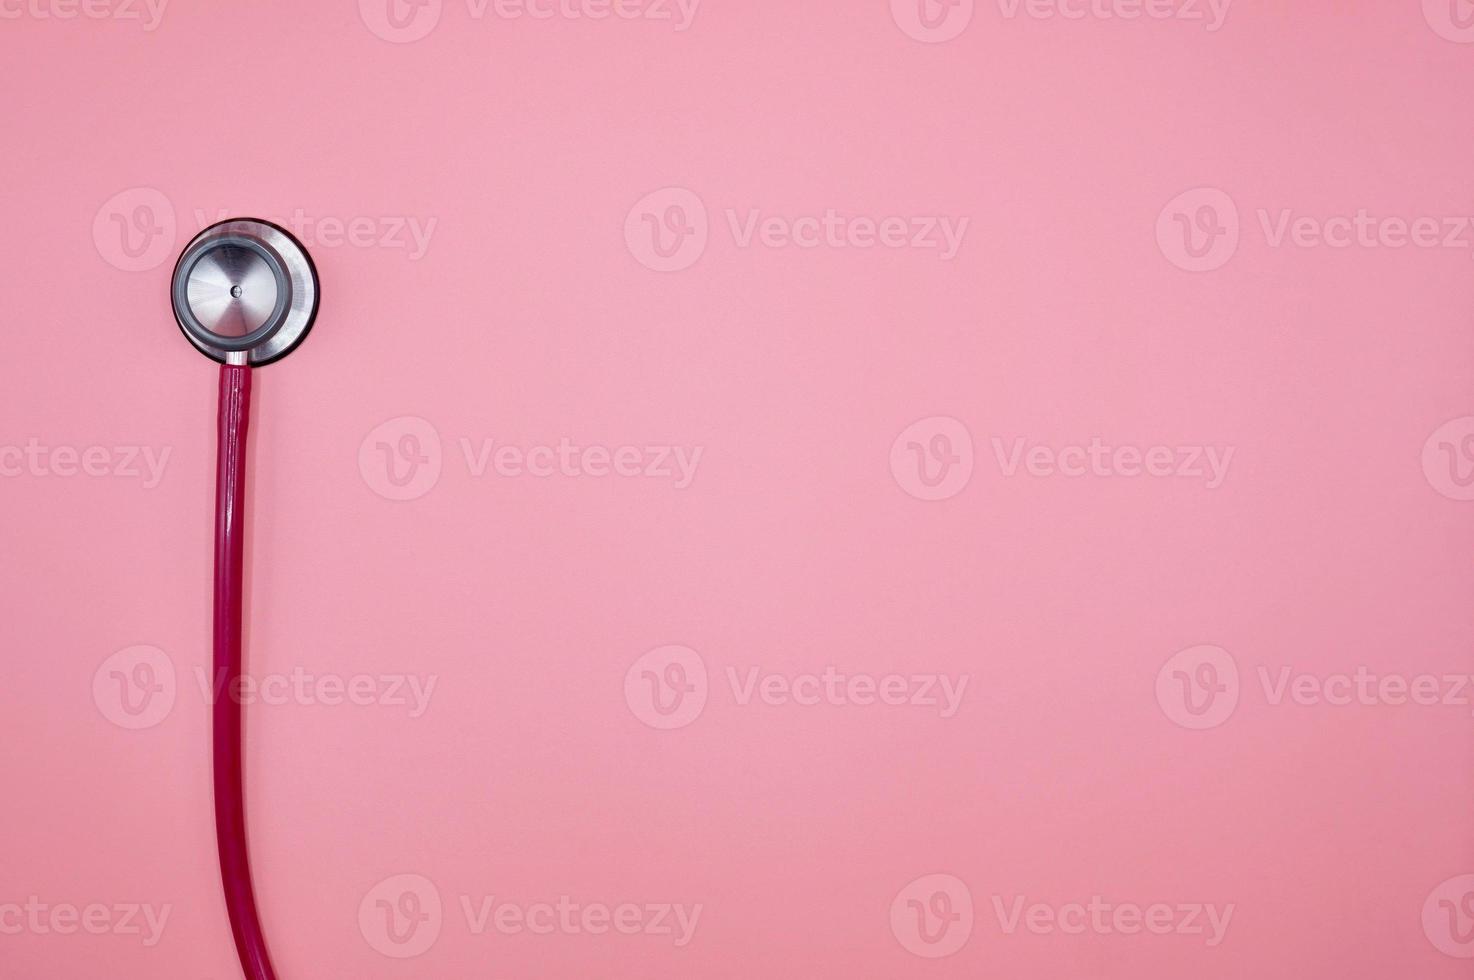 un estetoscopio rosa sobre fondo rosa foto